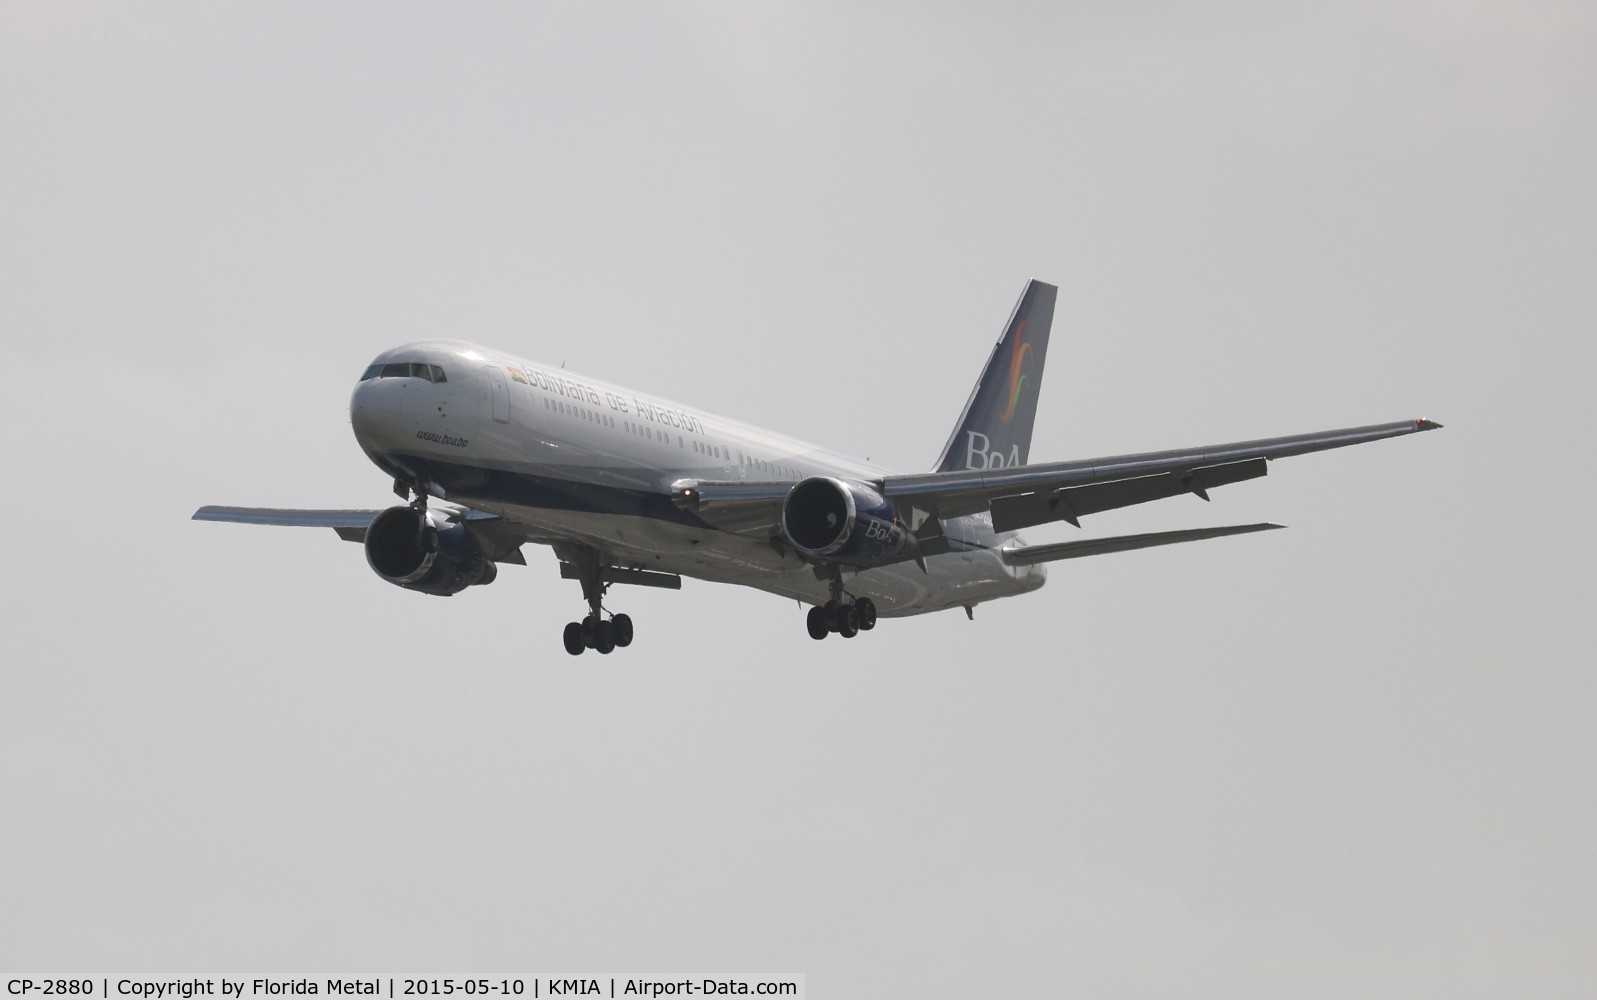 CP-2880, 1994 Boeing 767-33A/ER C/N 27376, MIA spotting